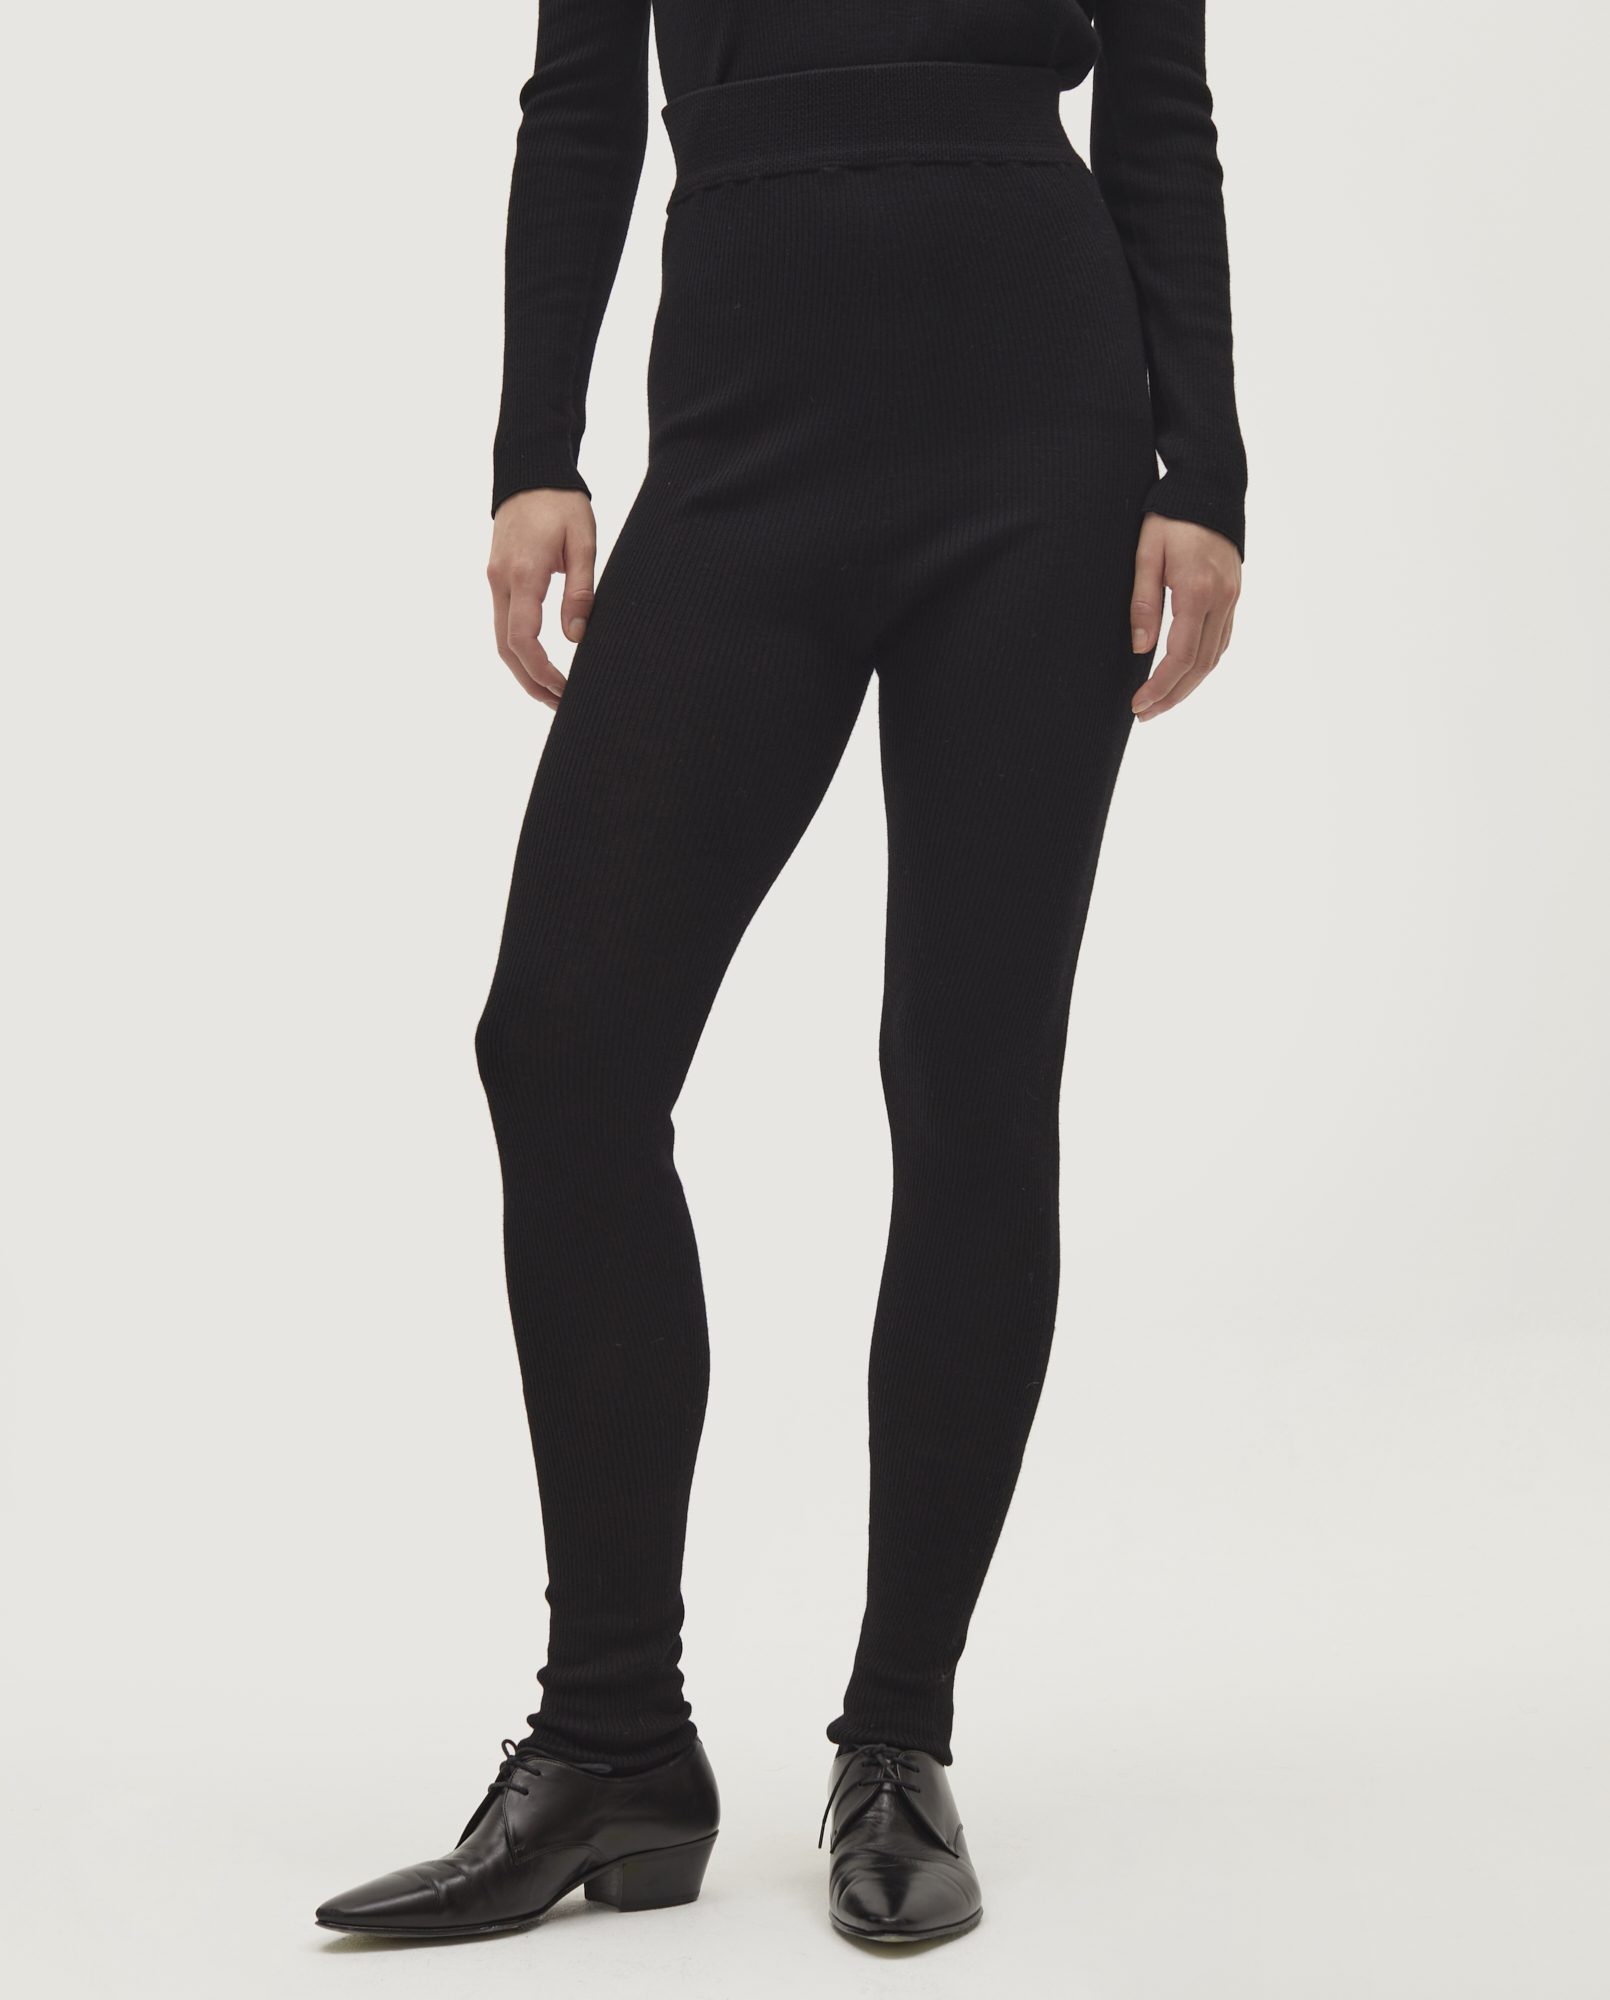 https://babaa.es/wp-content/uploads/2022/10/leggings-woman-no71-black-11.jpg